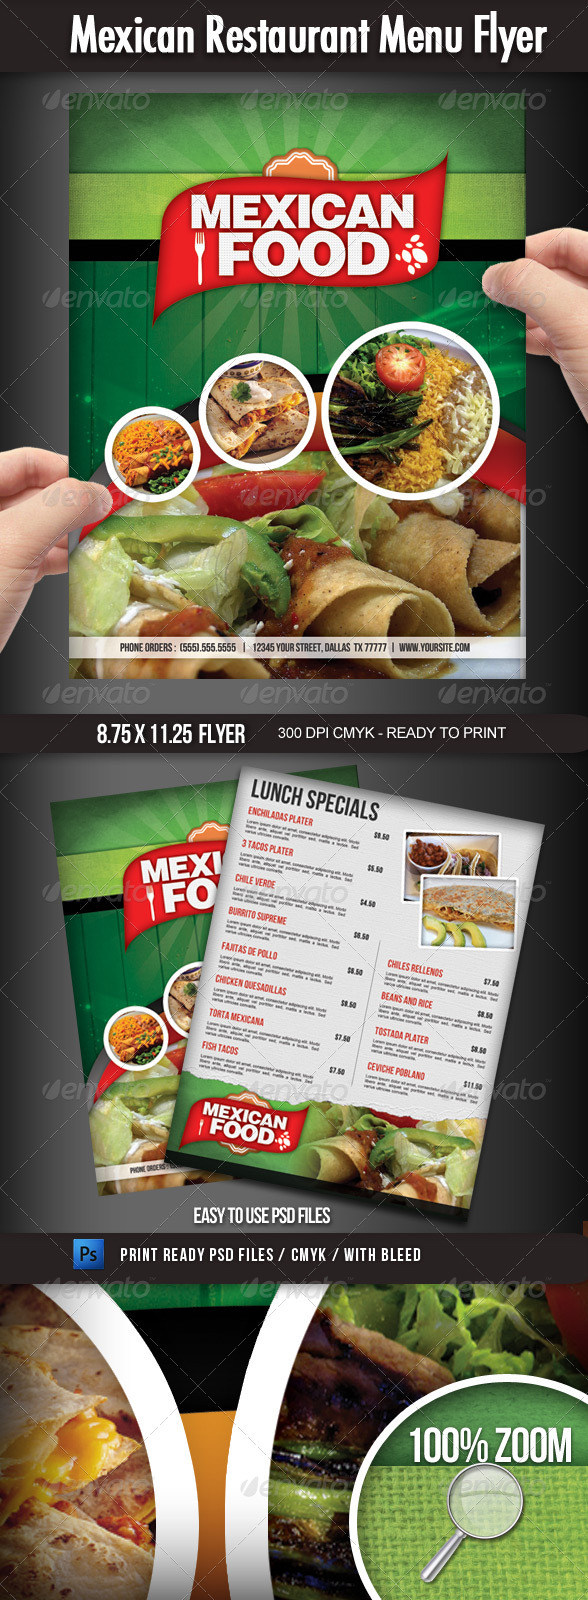 Mexican Restaurant Menu Flyer by boca2600  GraphicRiver